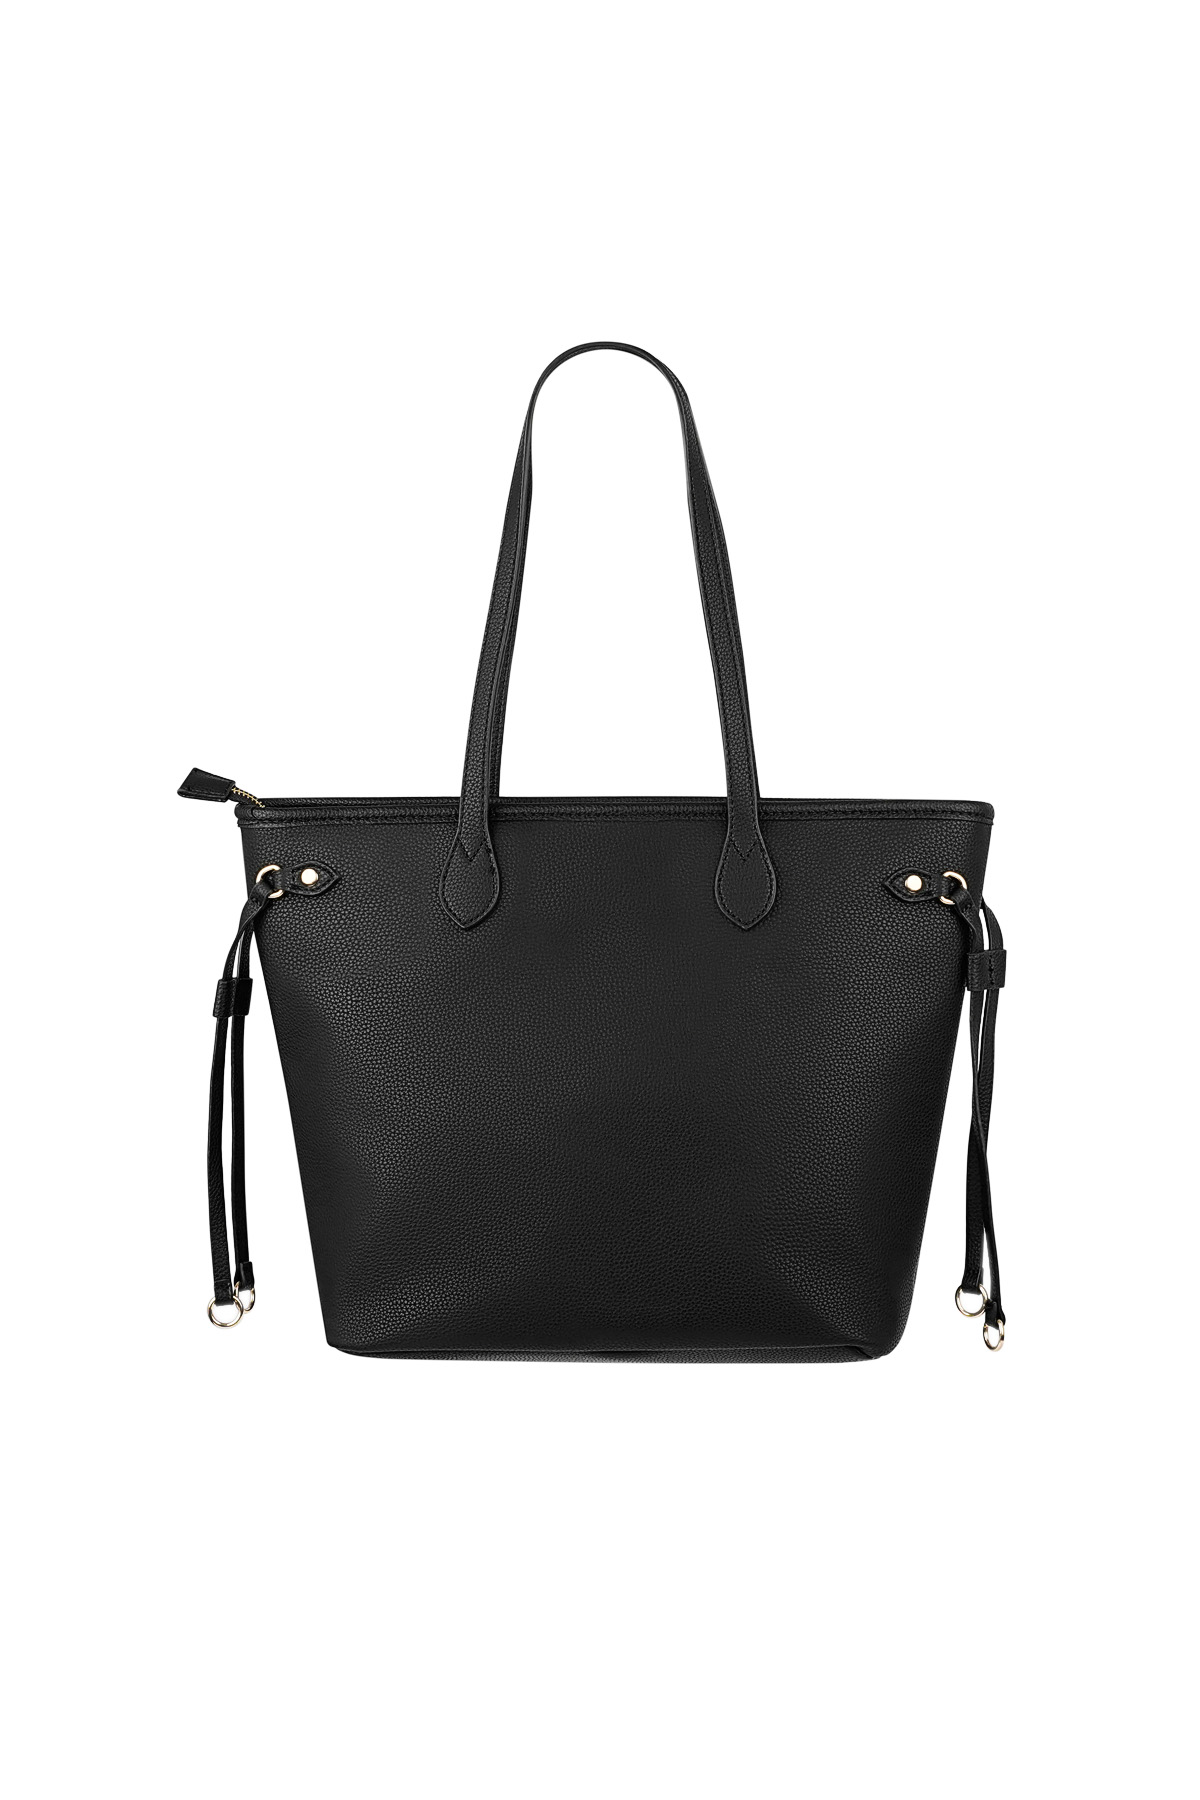 Handbag with straps - black h5 